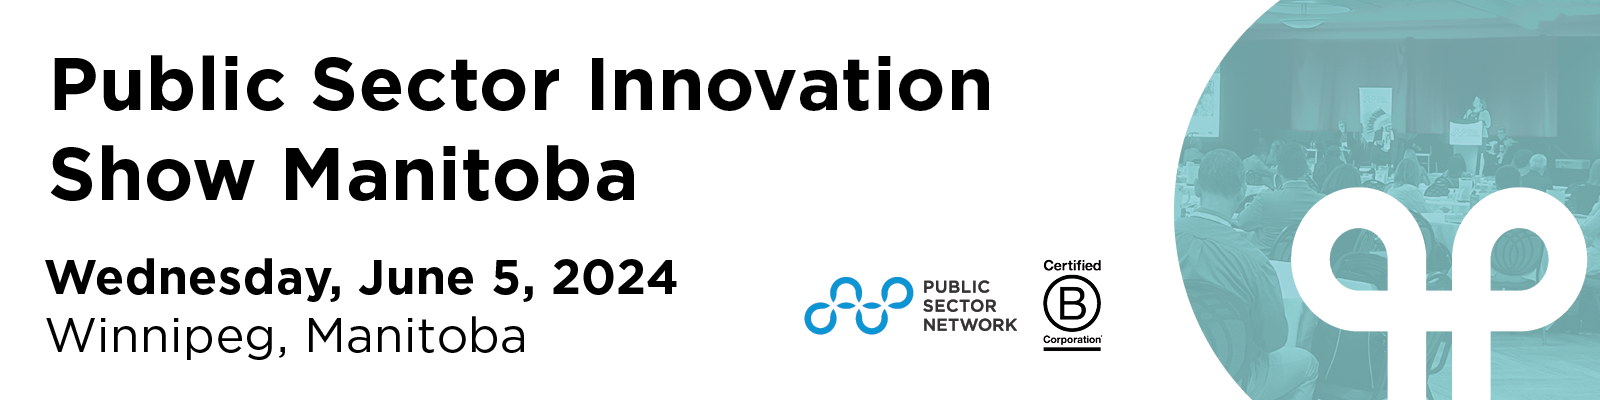 Public Sector Innovation Show Manitoba